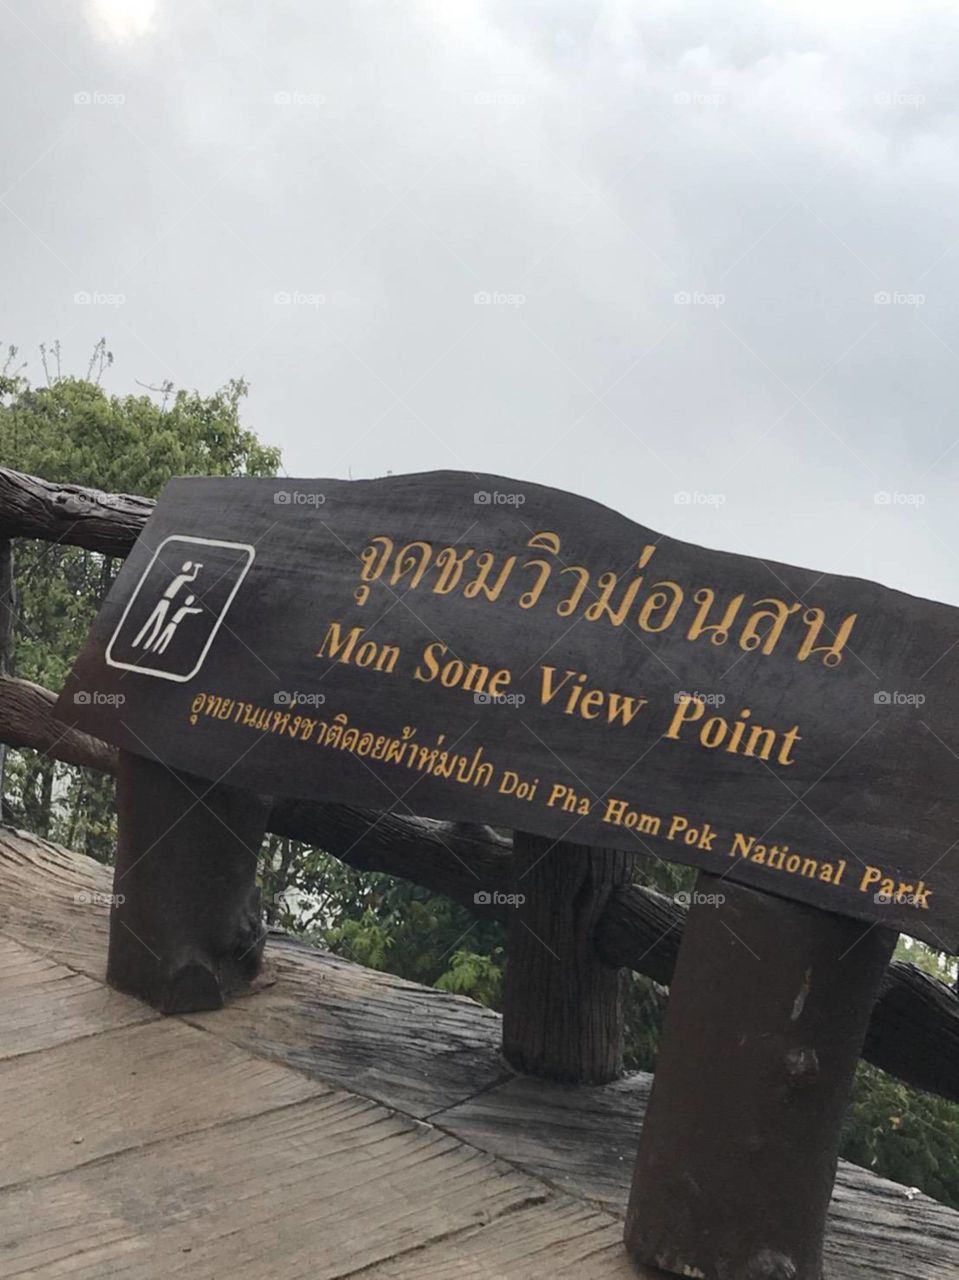 Mon Some View Point
Doi Pha Hom Pok National Park
Chiang Mai
Thailand